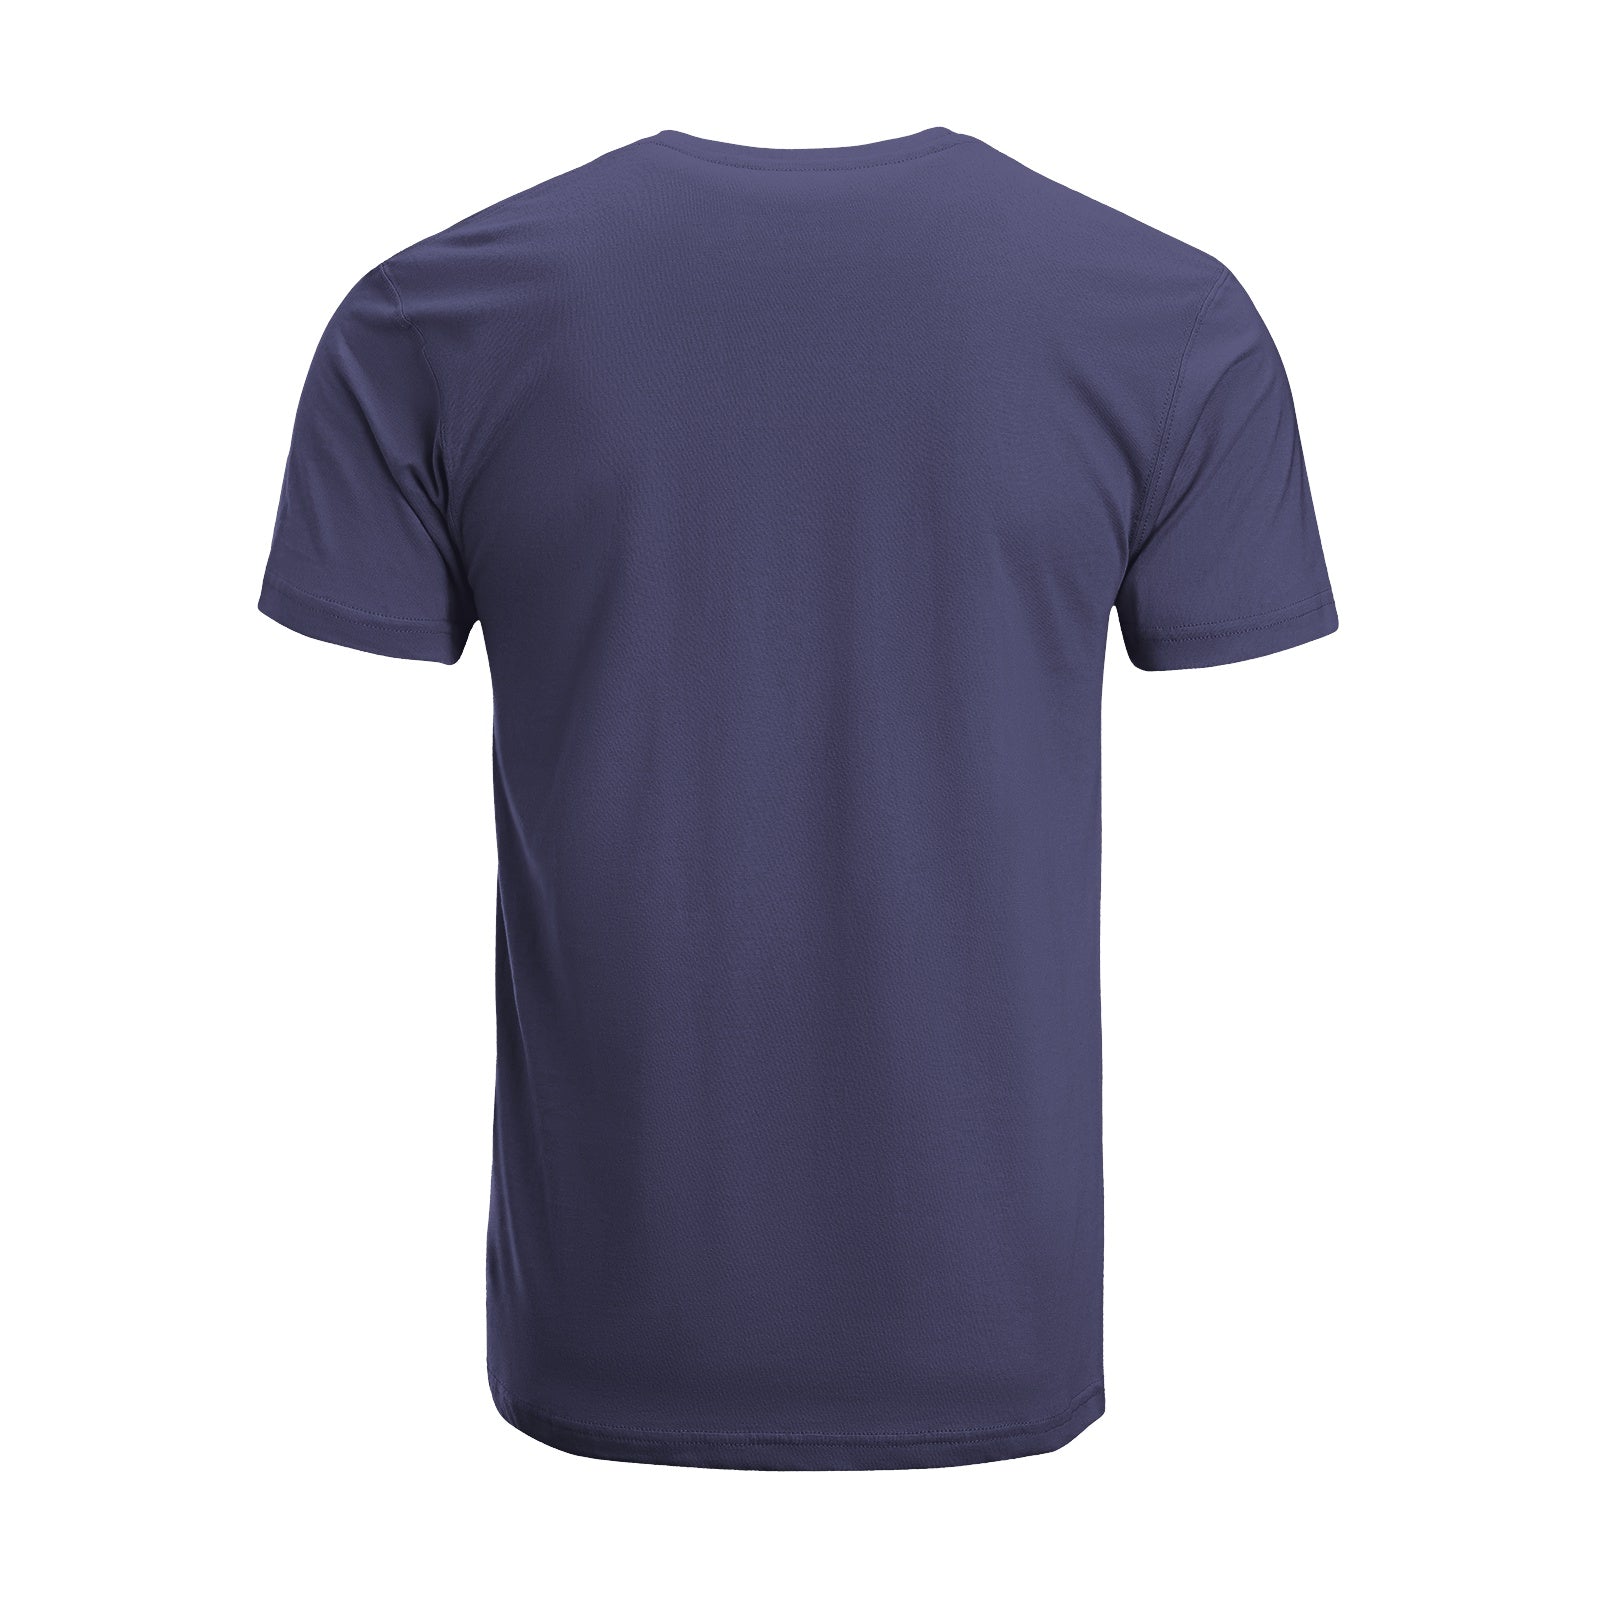 Unisex Short Sleeve Crew Neck Cotton Jersey T-Shirt CAT 01 - Tara-Outfits.com